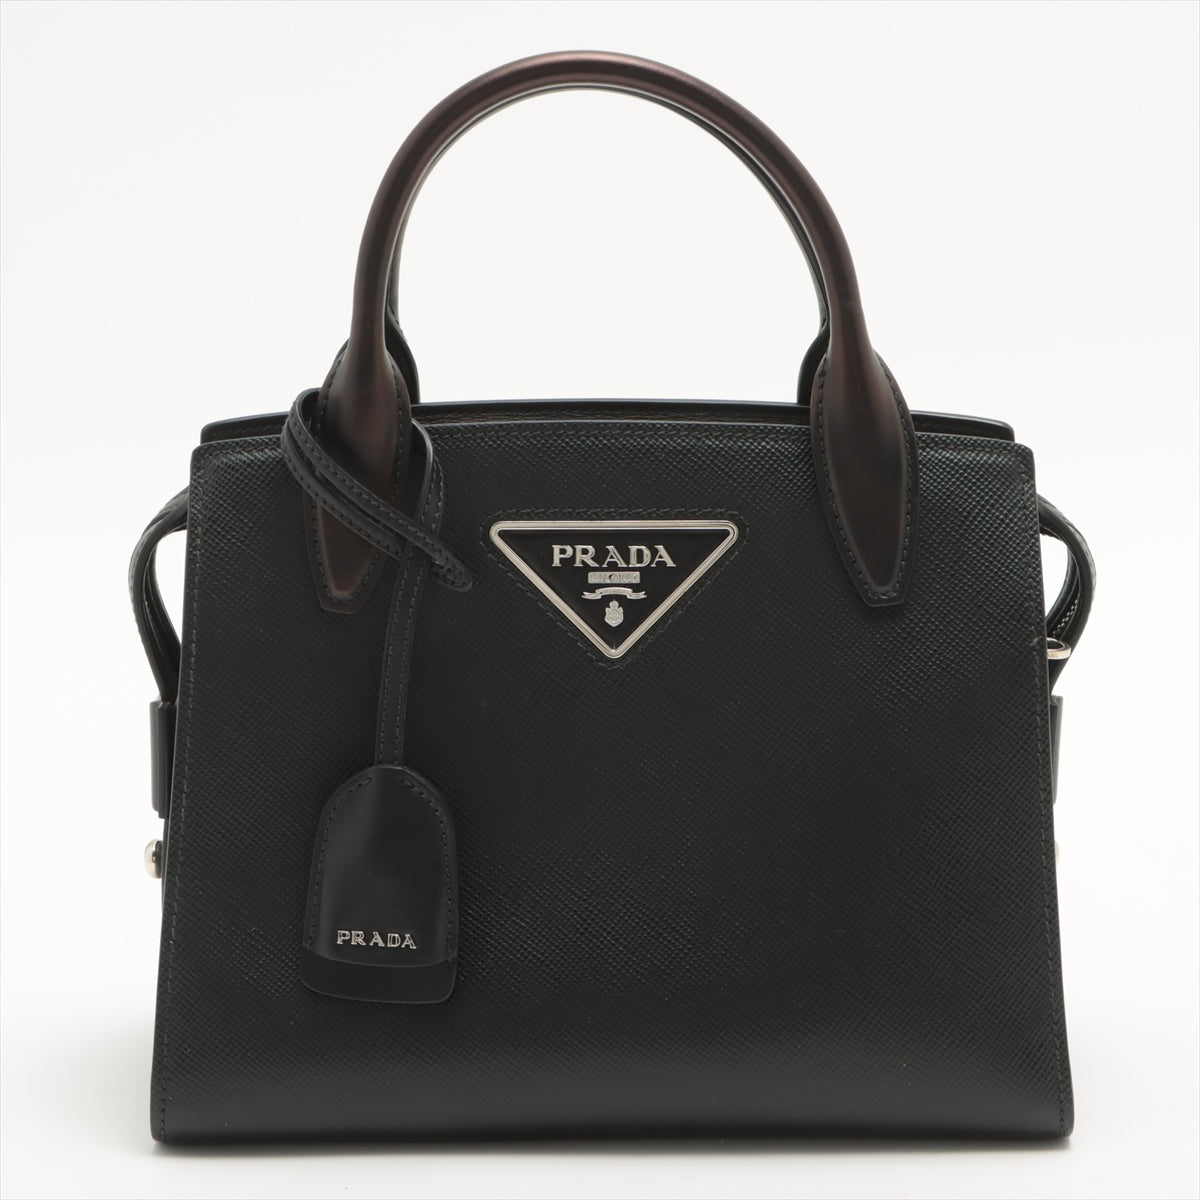 Second hand Prada Kristen Mini Saffiano Leather Black Bag - Tabita Bags